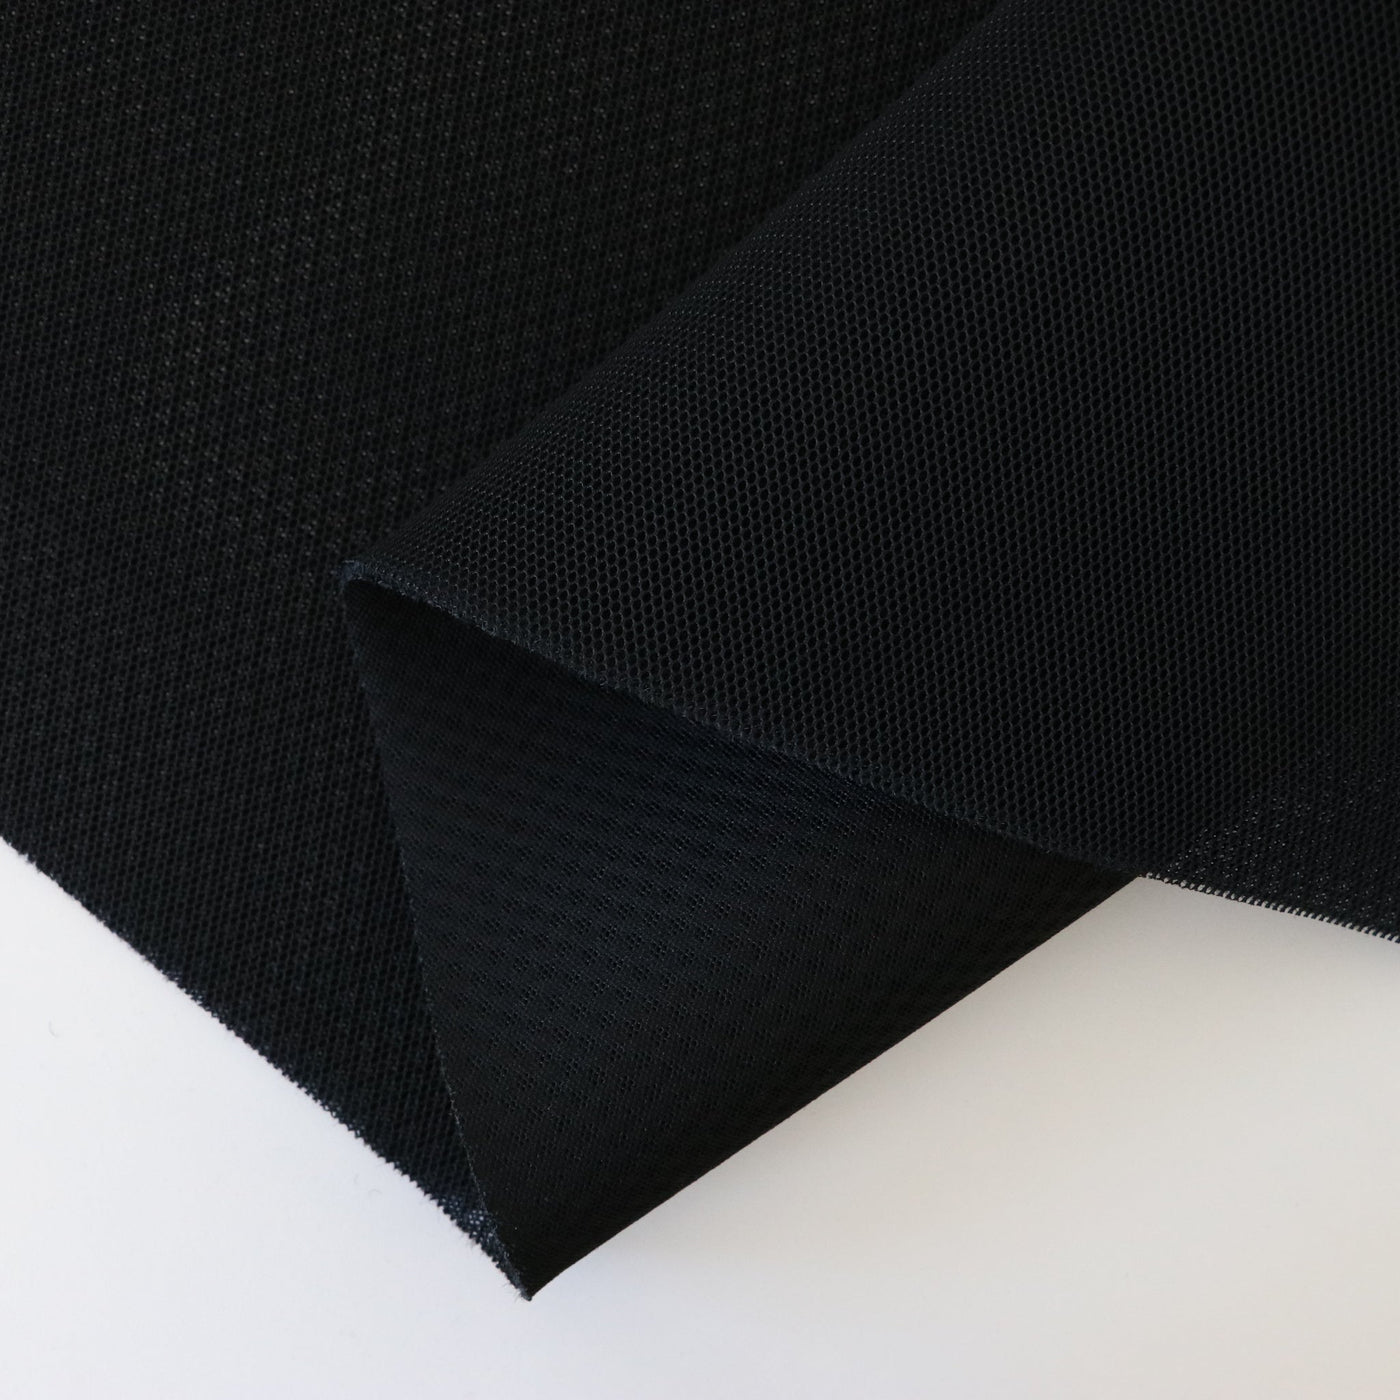 Air Mesh Fabric Black buying - Onlineshop Lasagroom